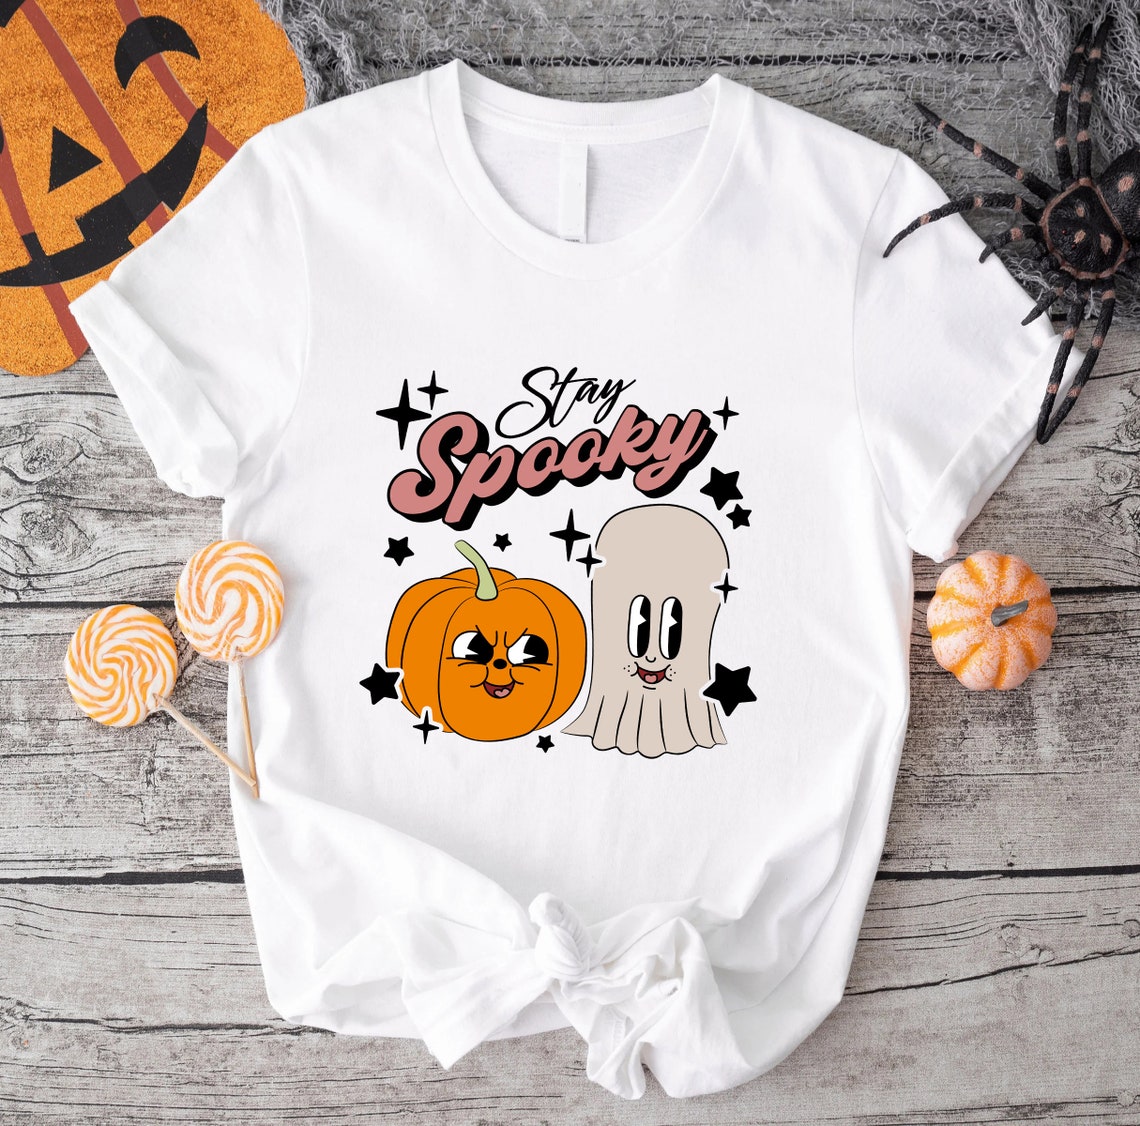 Retro Halloween t-shirt, Vintage Ghost Halloween Shirt, Retro Fall Shirt, Fall Shirt, Halloween Shirt, Spooky Season tee